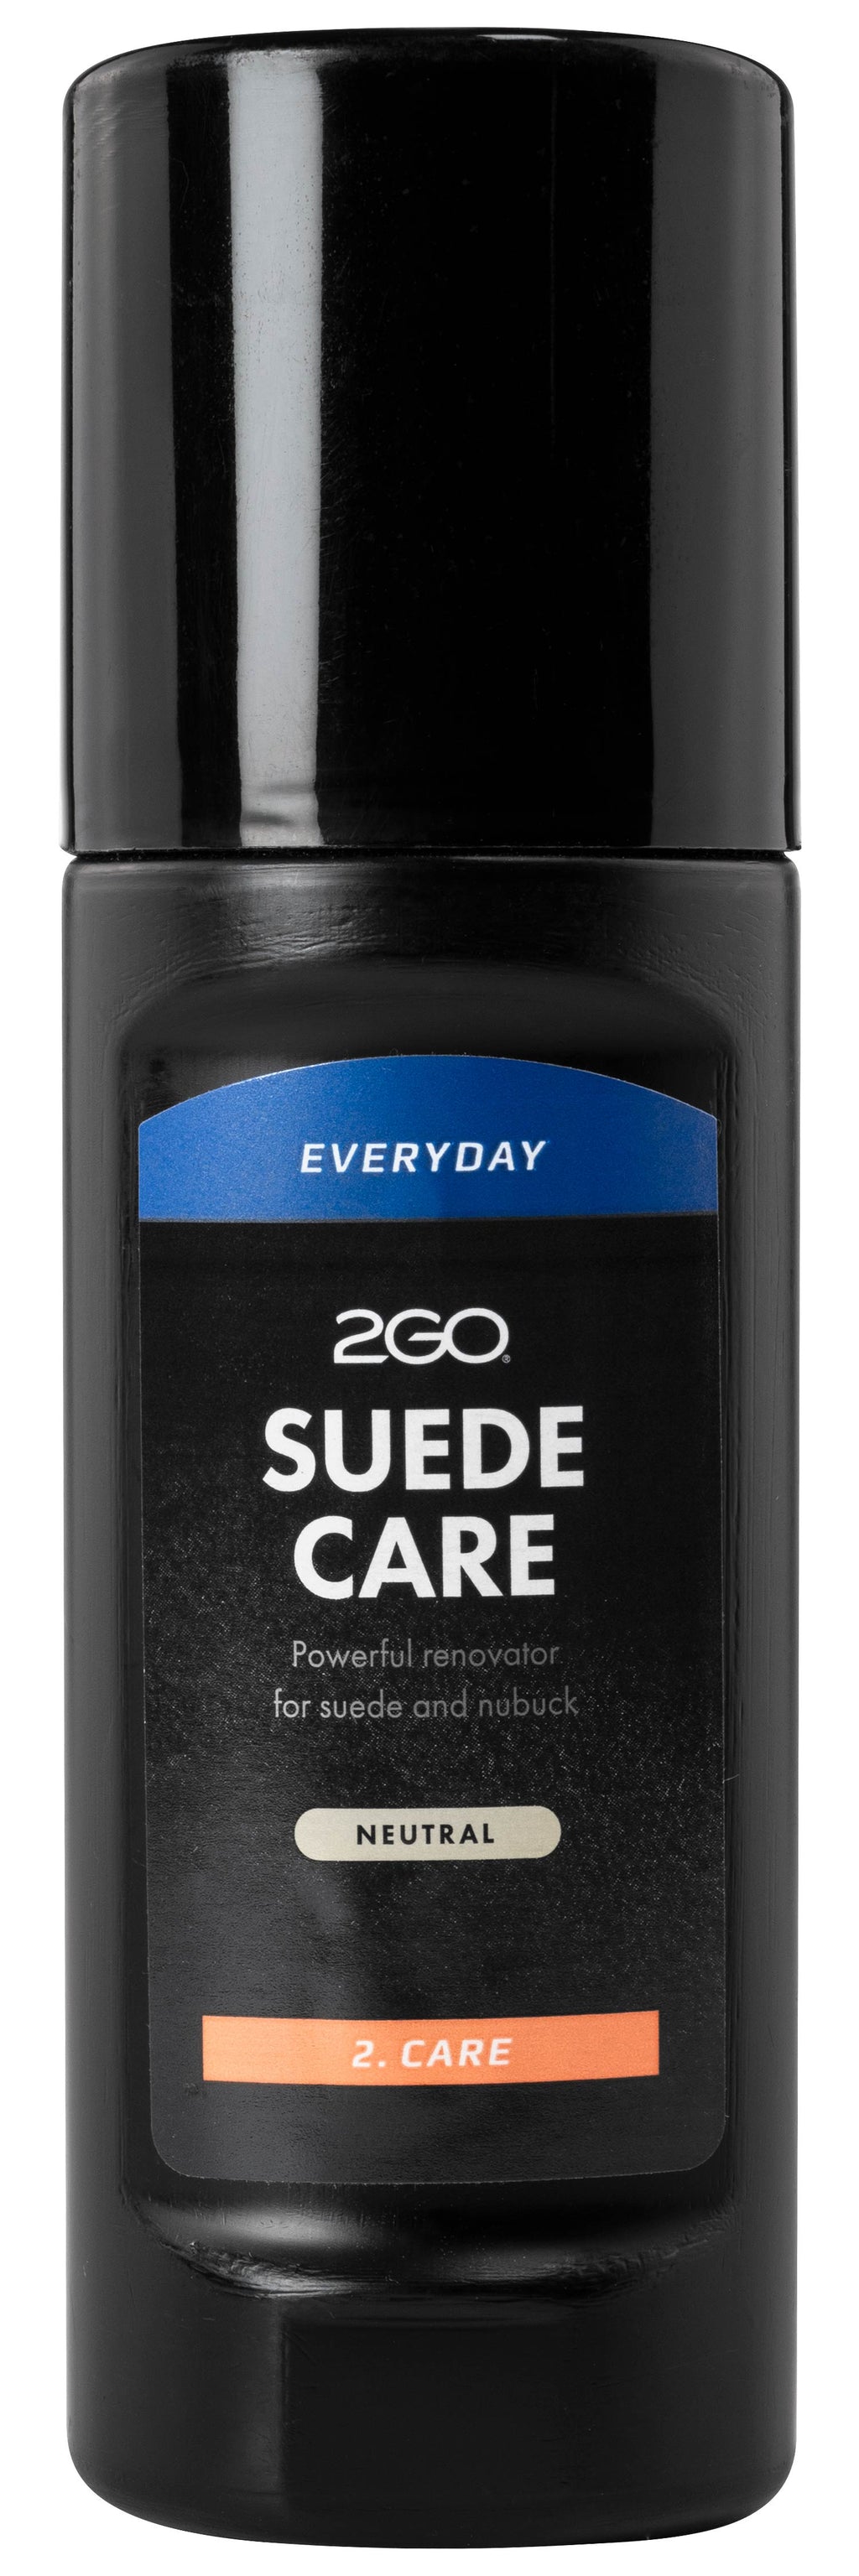 2GO - Suede Care